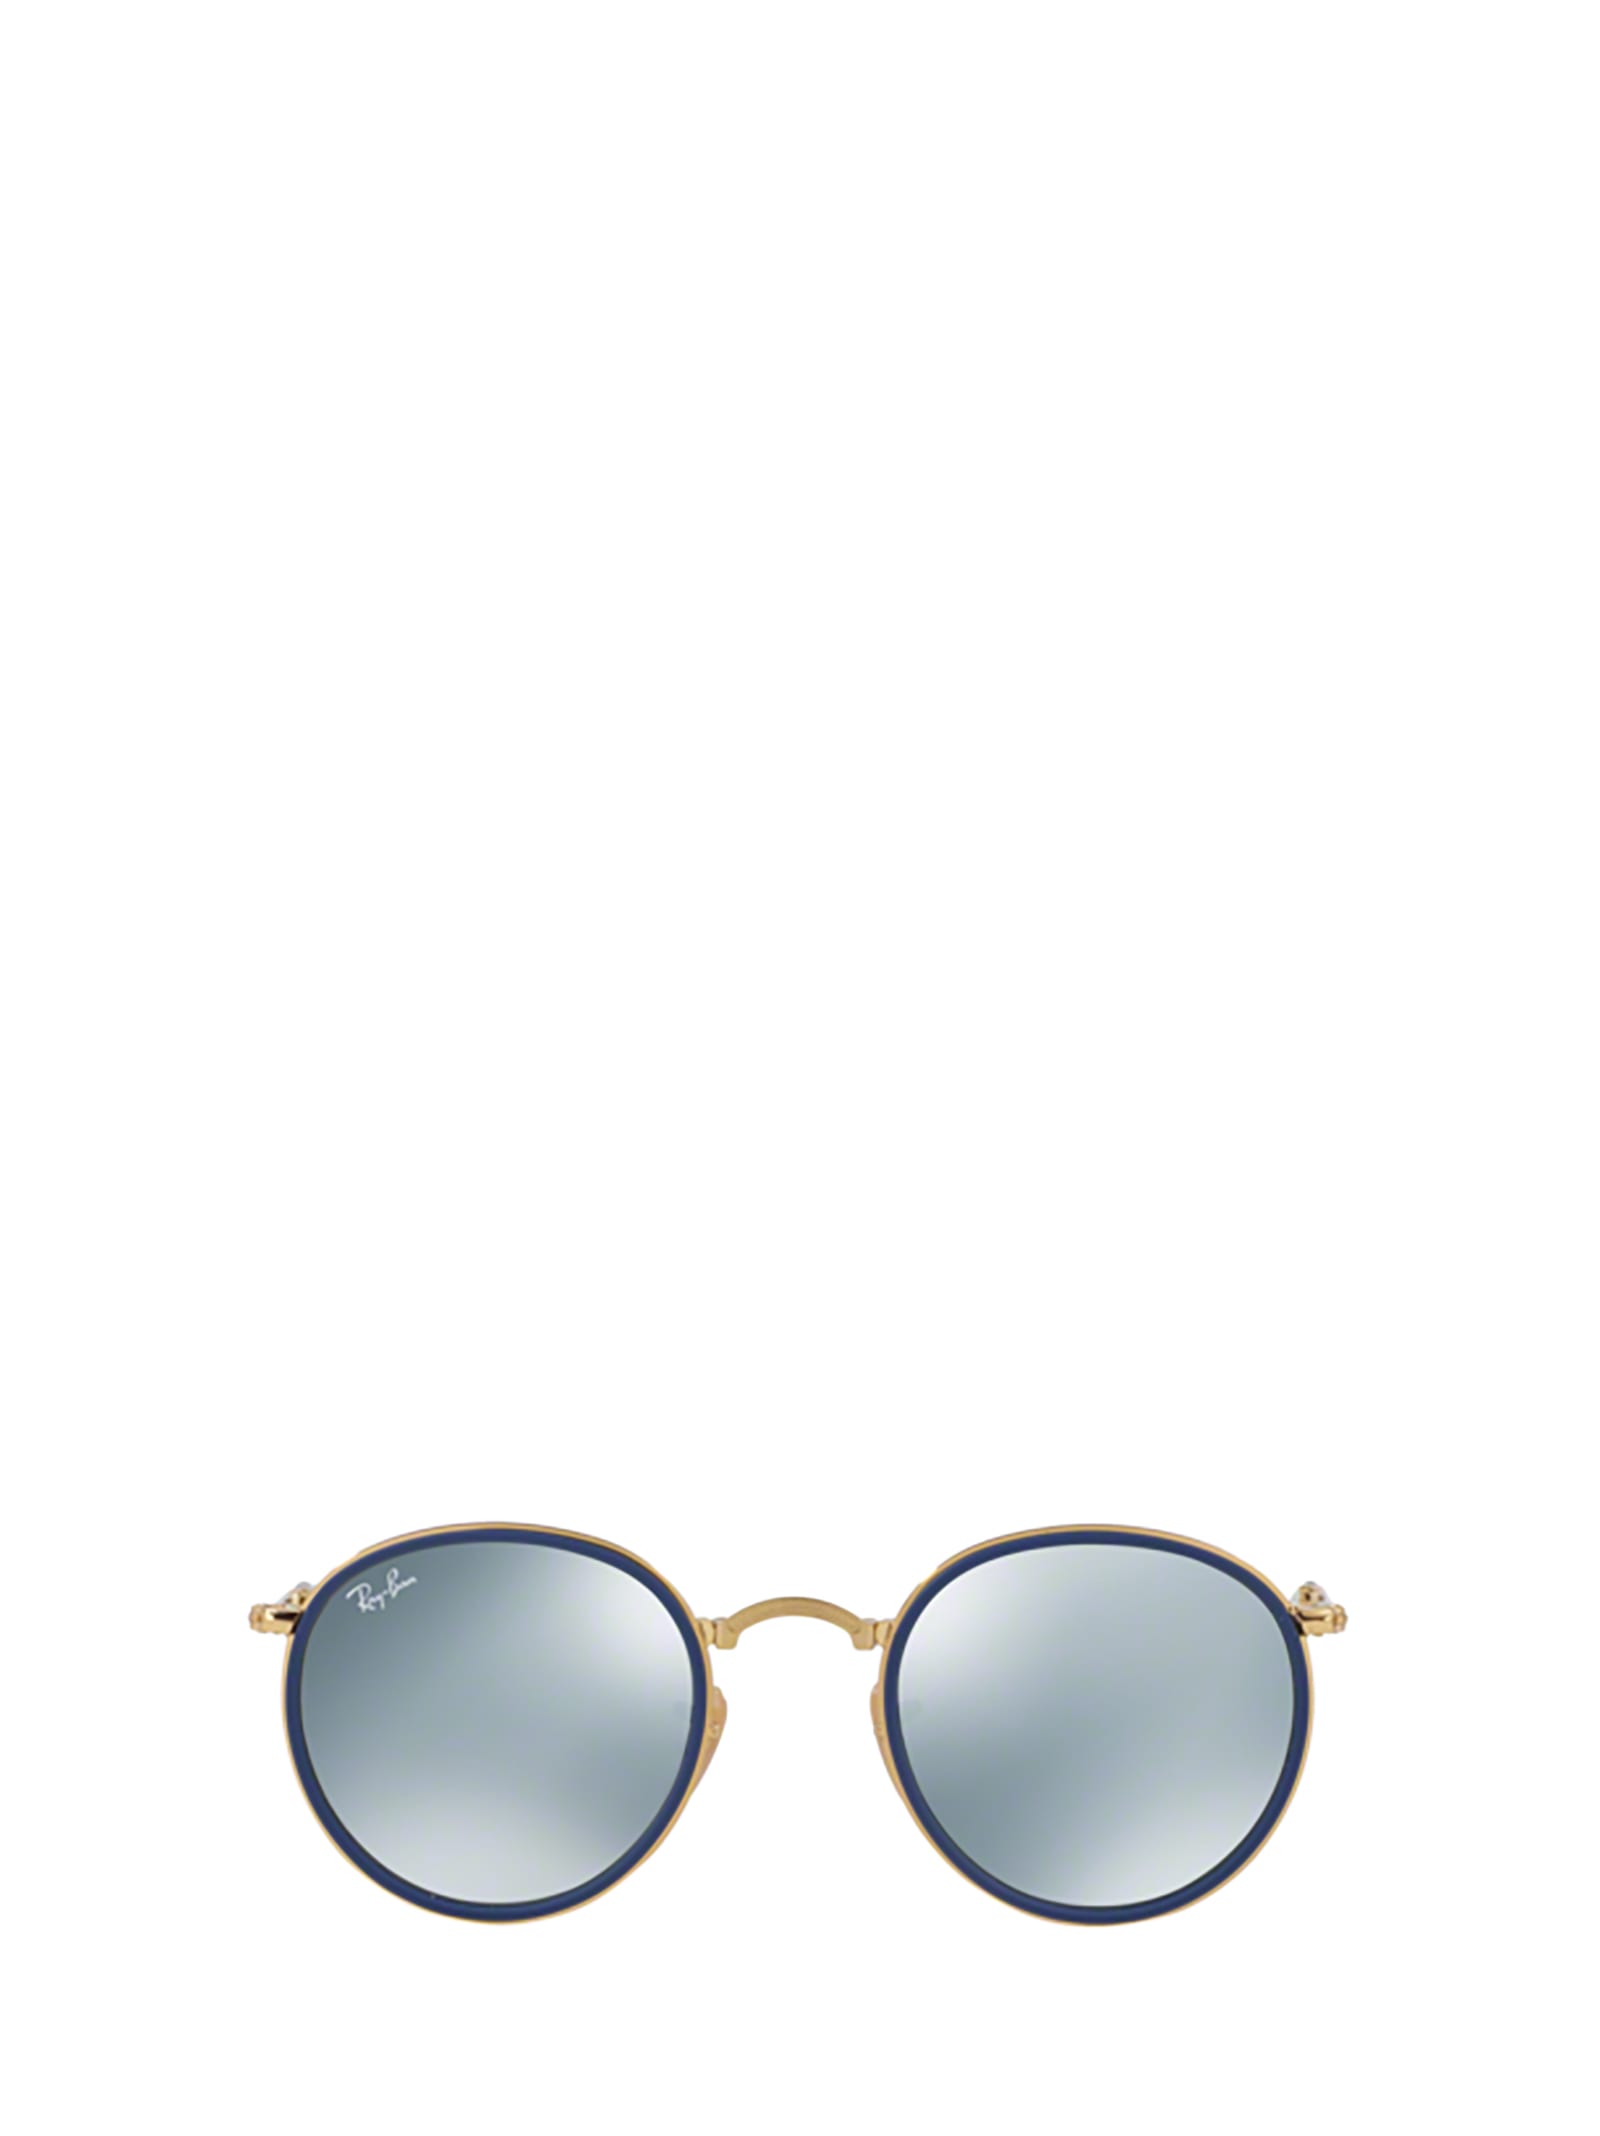 Ray Ban Ray-ban Rb3517 Gold Sunglasses